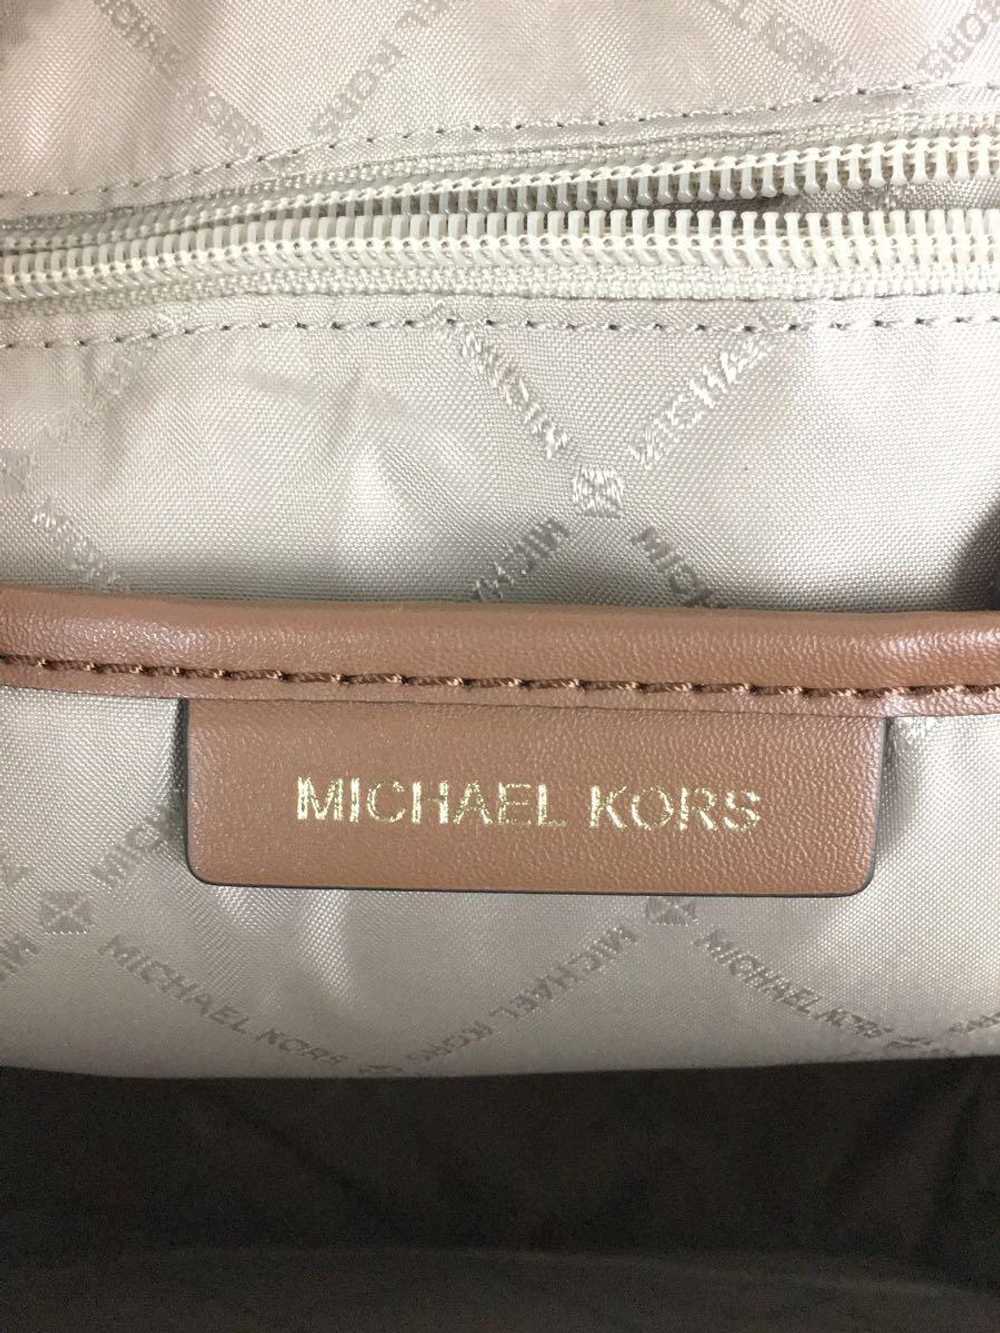 Michael Kors Adina Md Backpack/Rucksack/Leather/B… - image 5